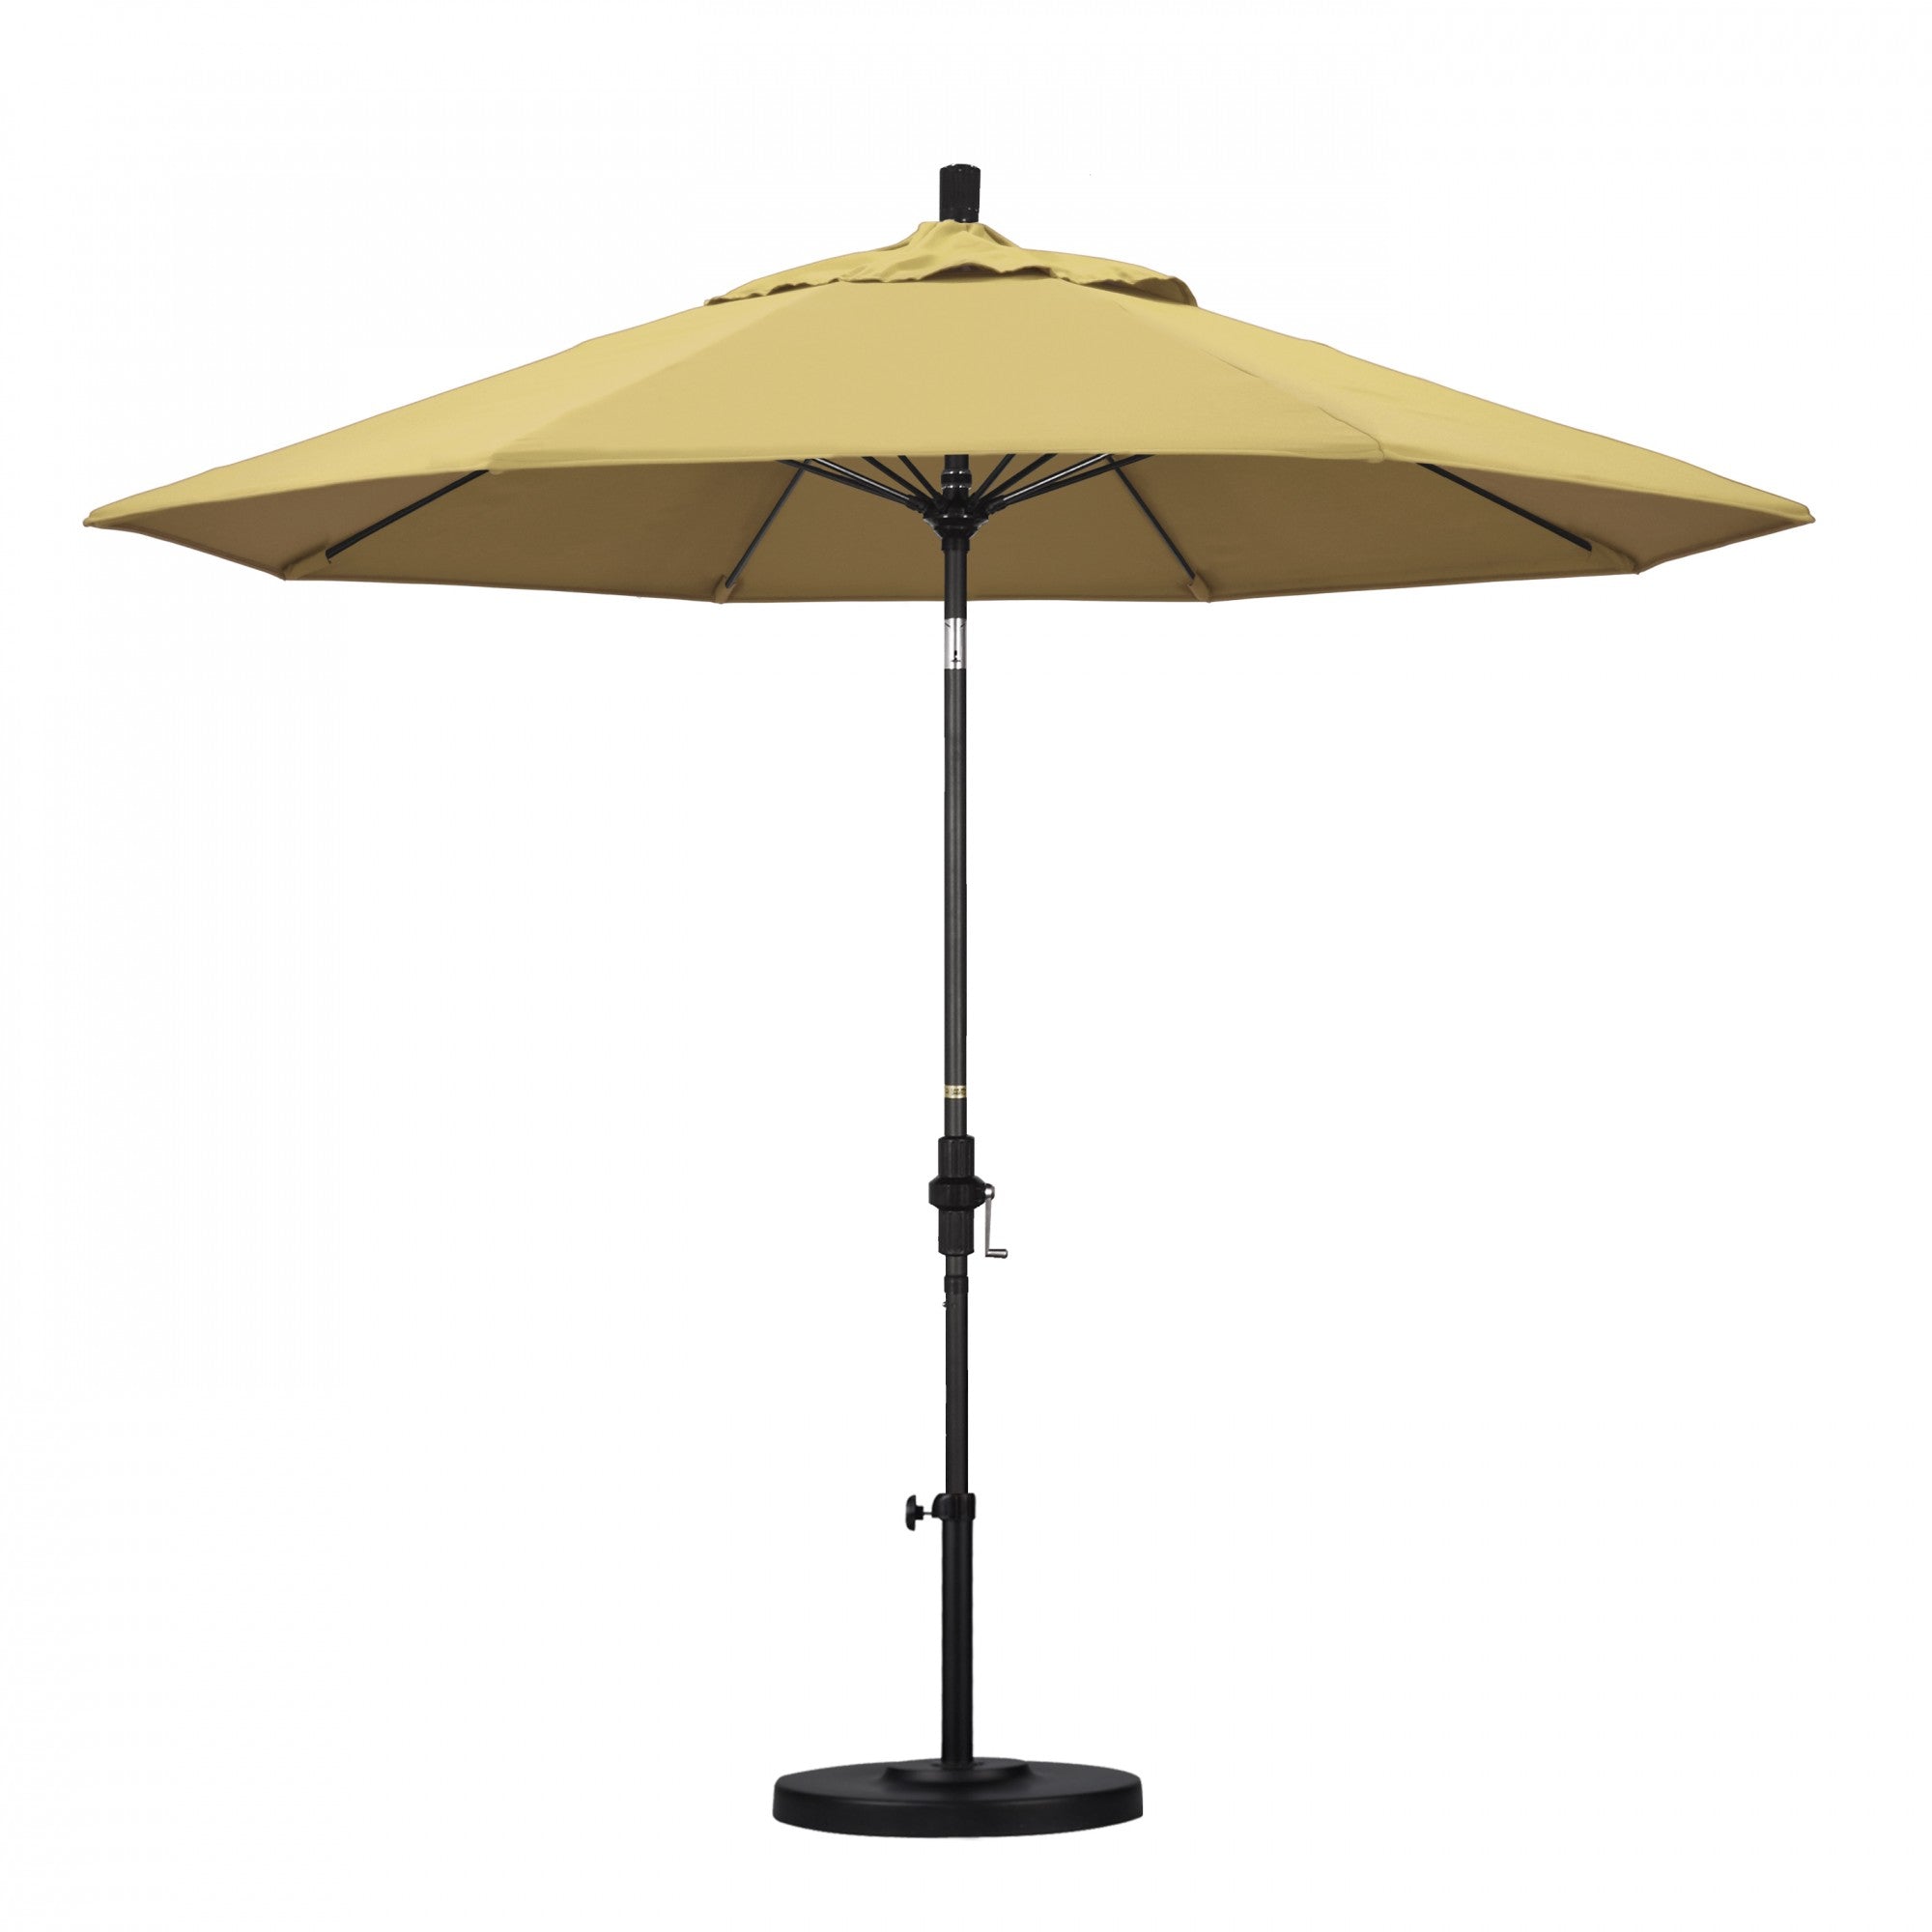 California Umbrella - 9' - Patio Umbrella Umbrella - Aluminum Pole - Wheat - Sunbrella  - GSCUF908705-5414